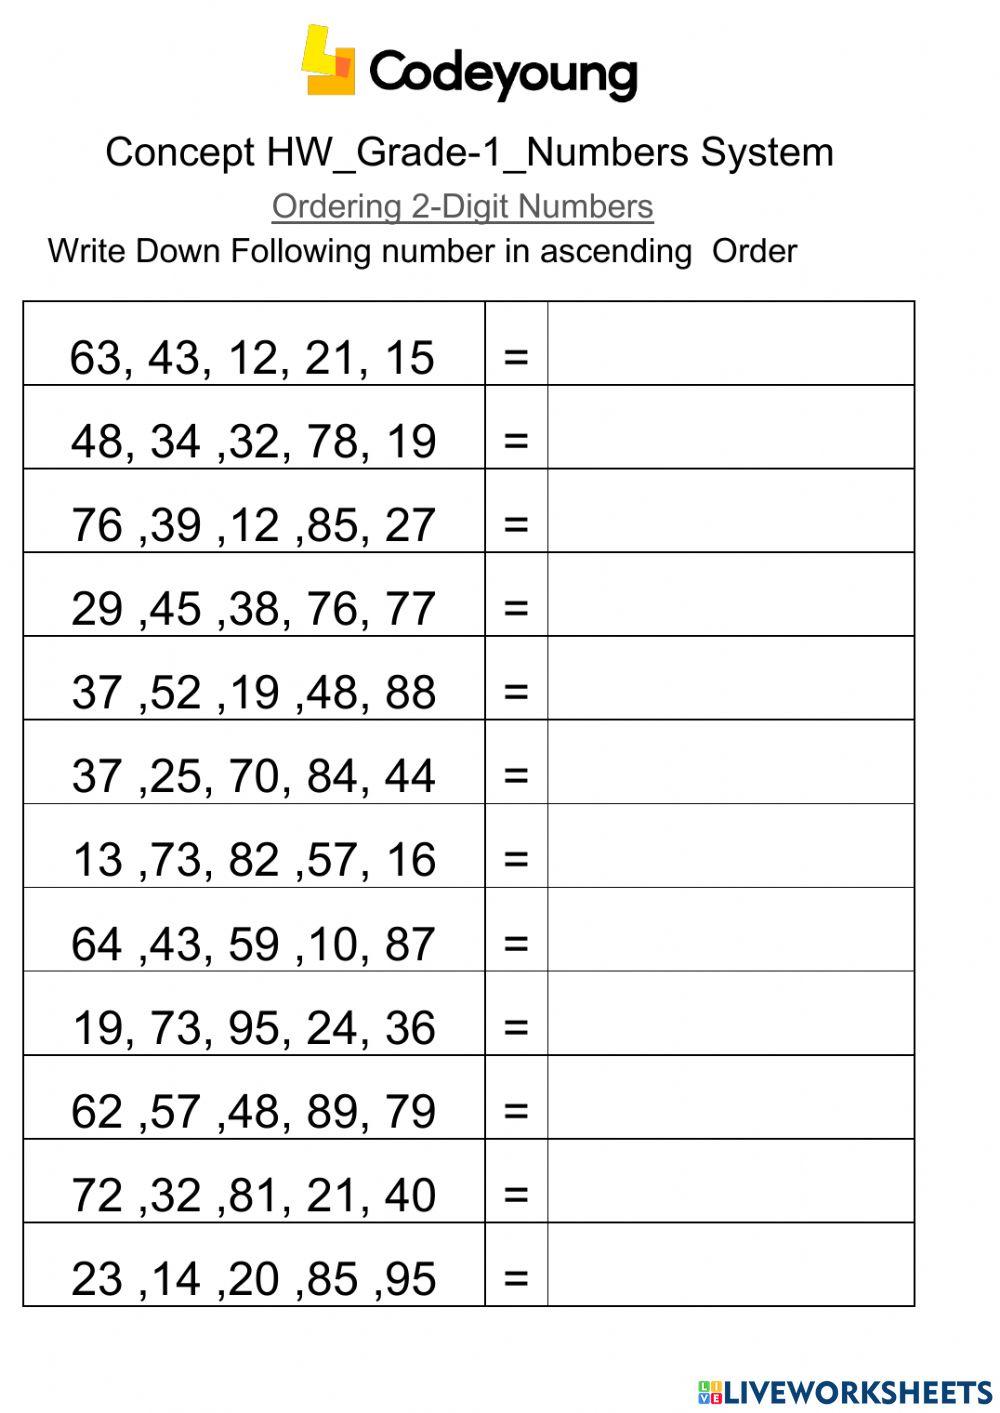 Ordering 2-Digit Numbers-Concept HW